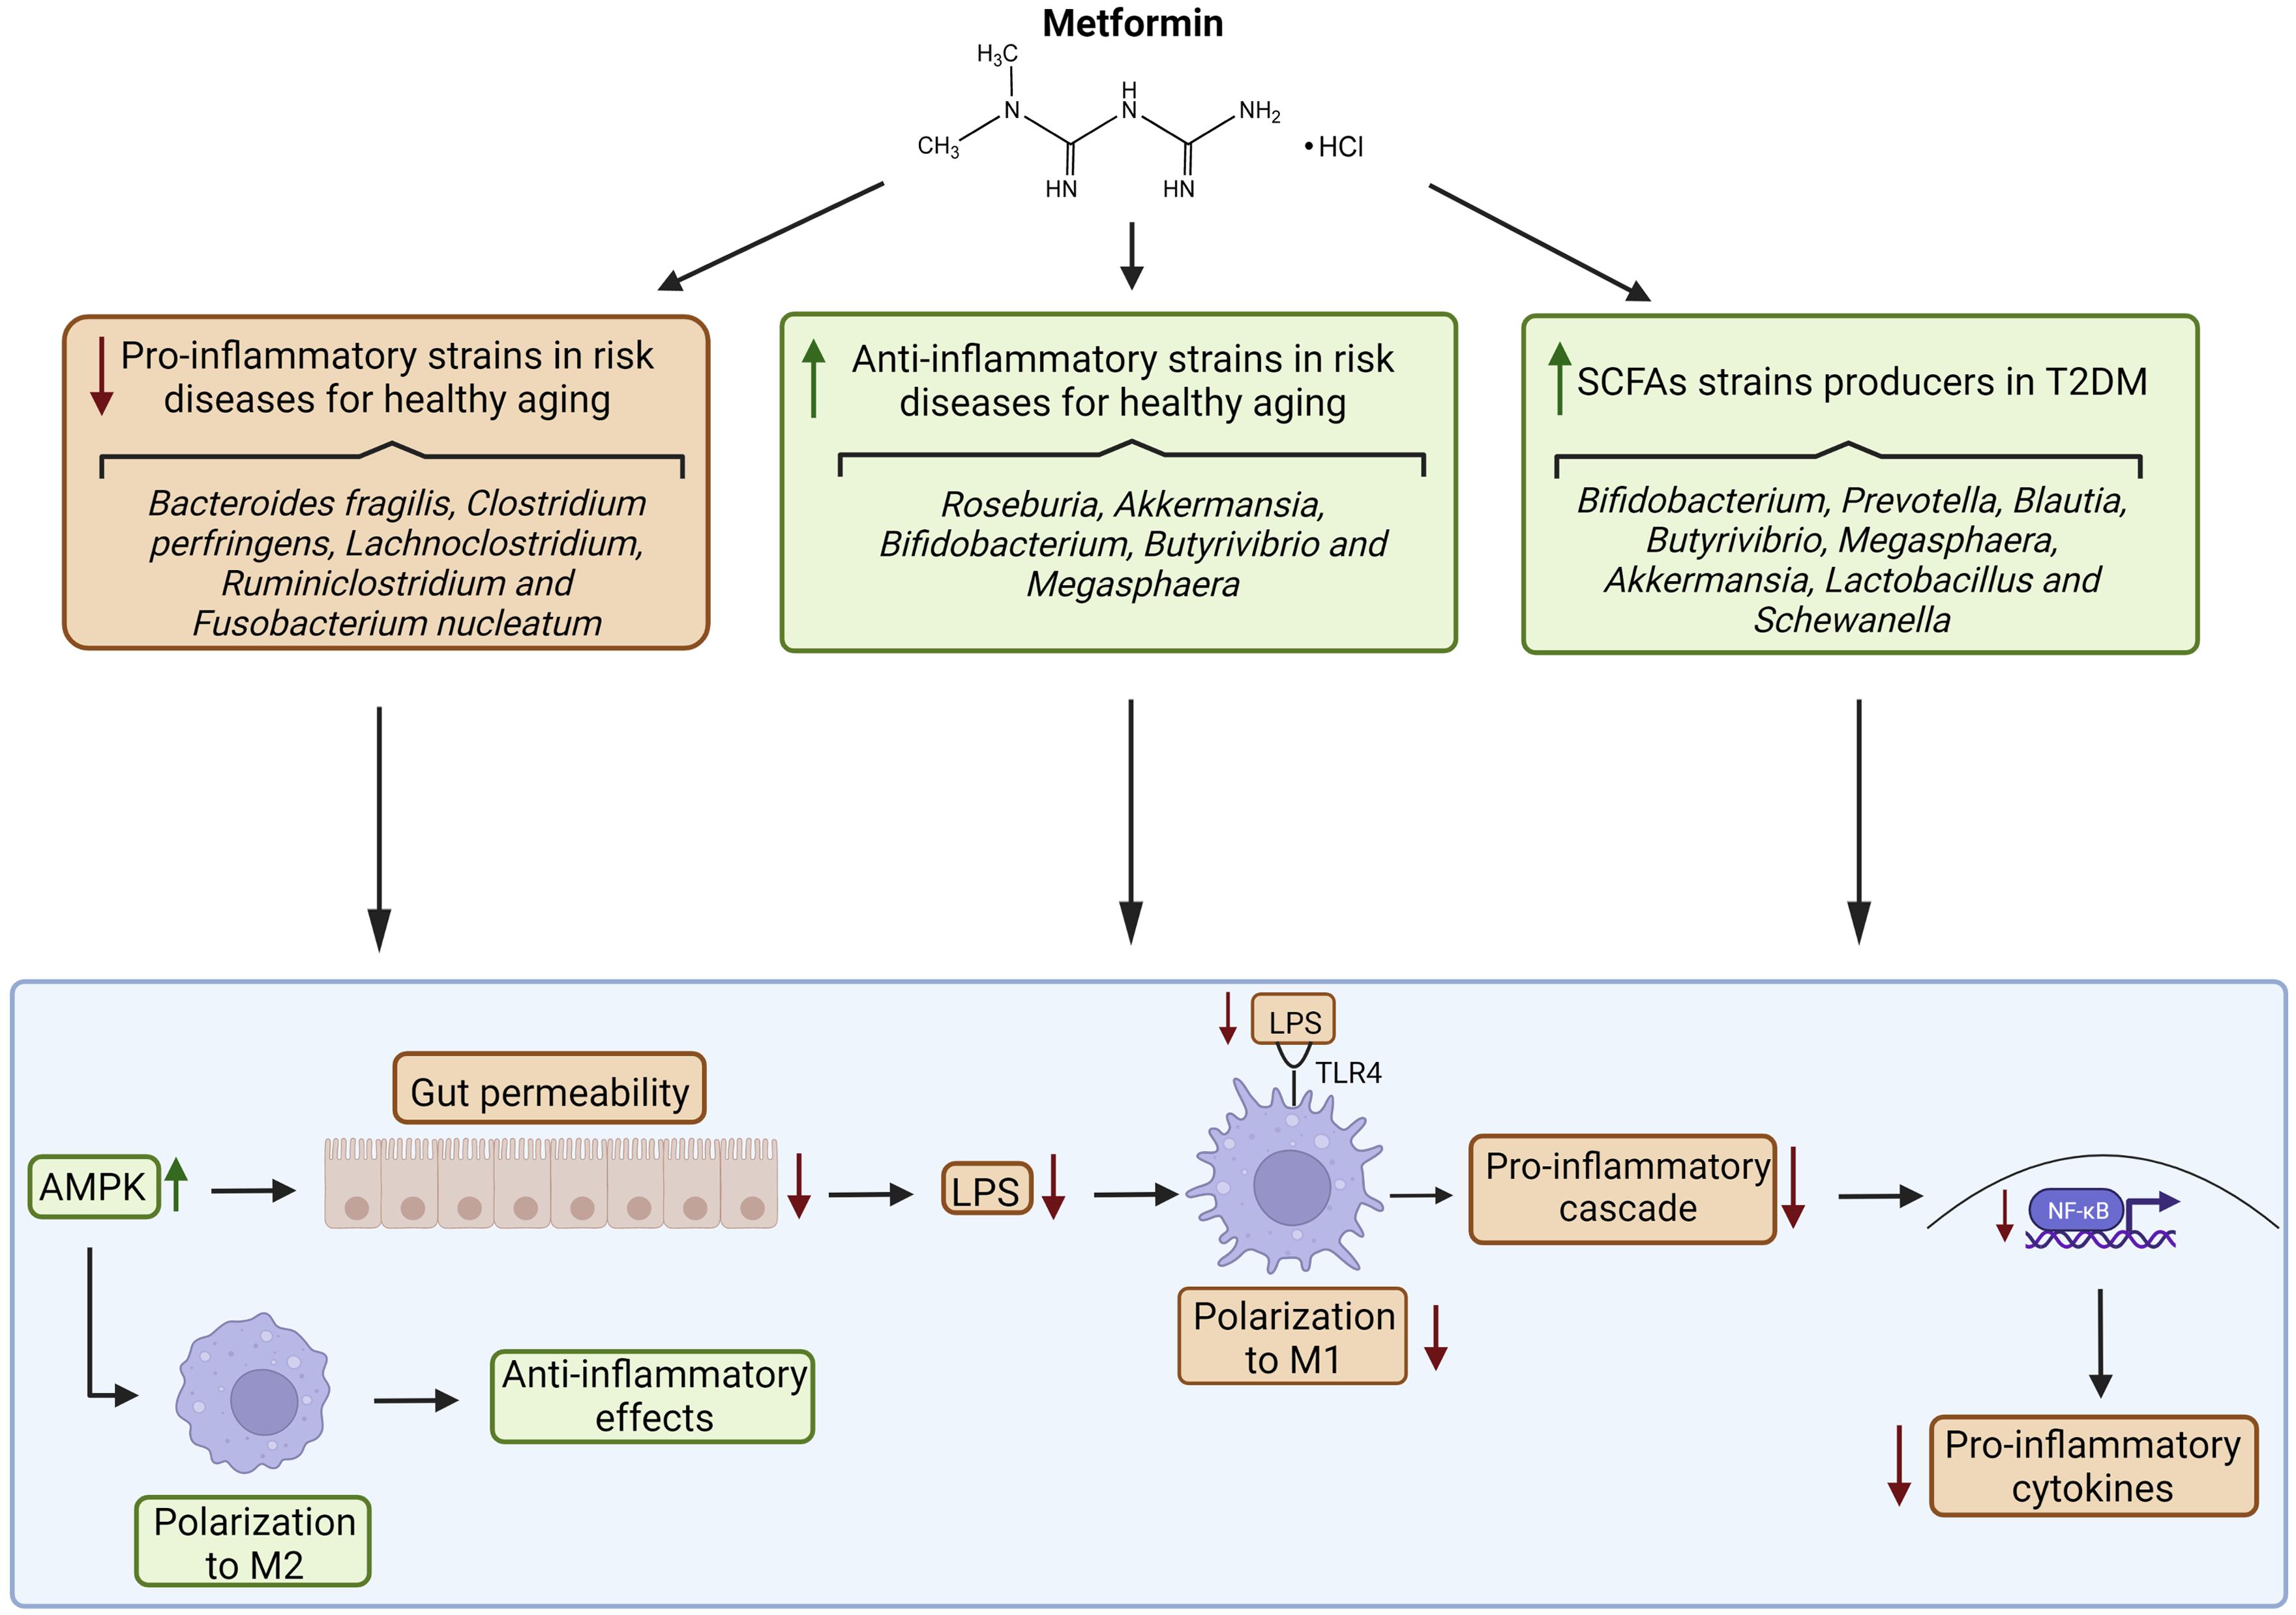 Metformin and the anti-aging effects through microbiota modulation.